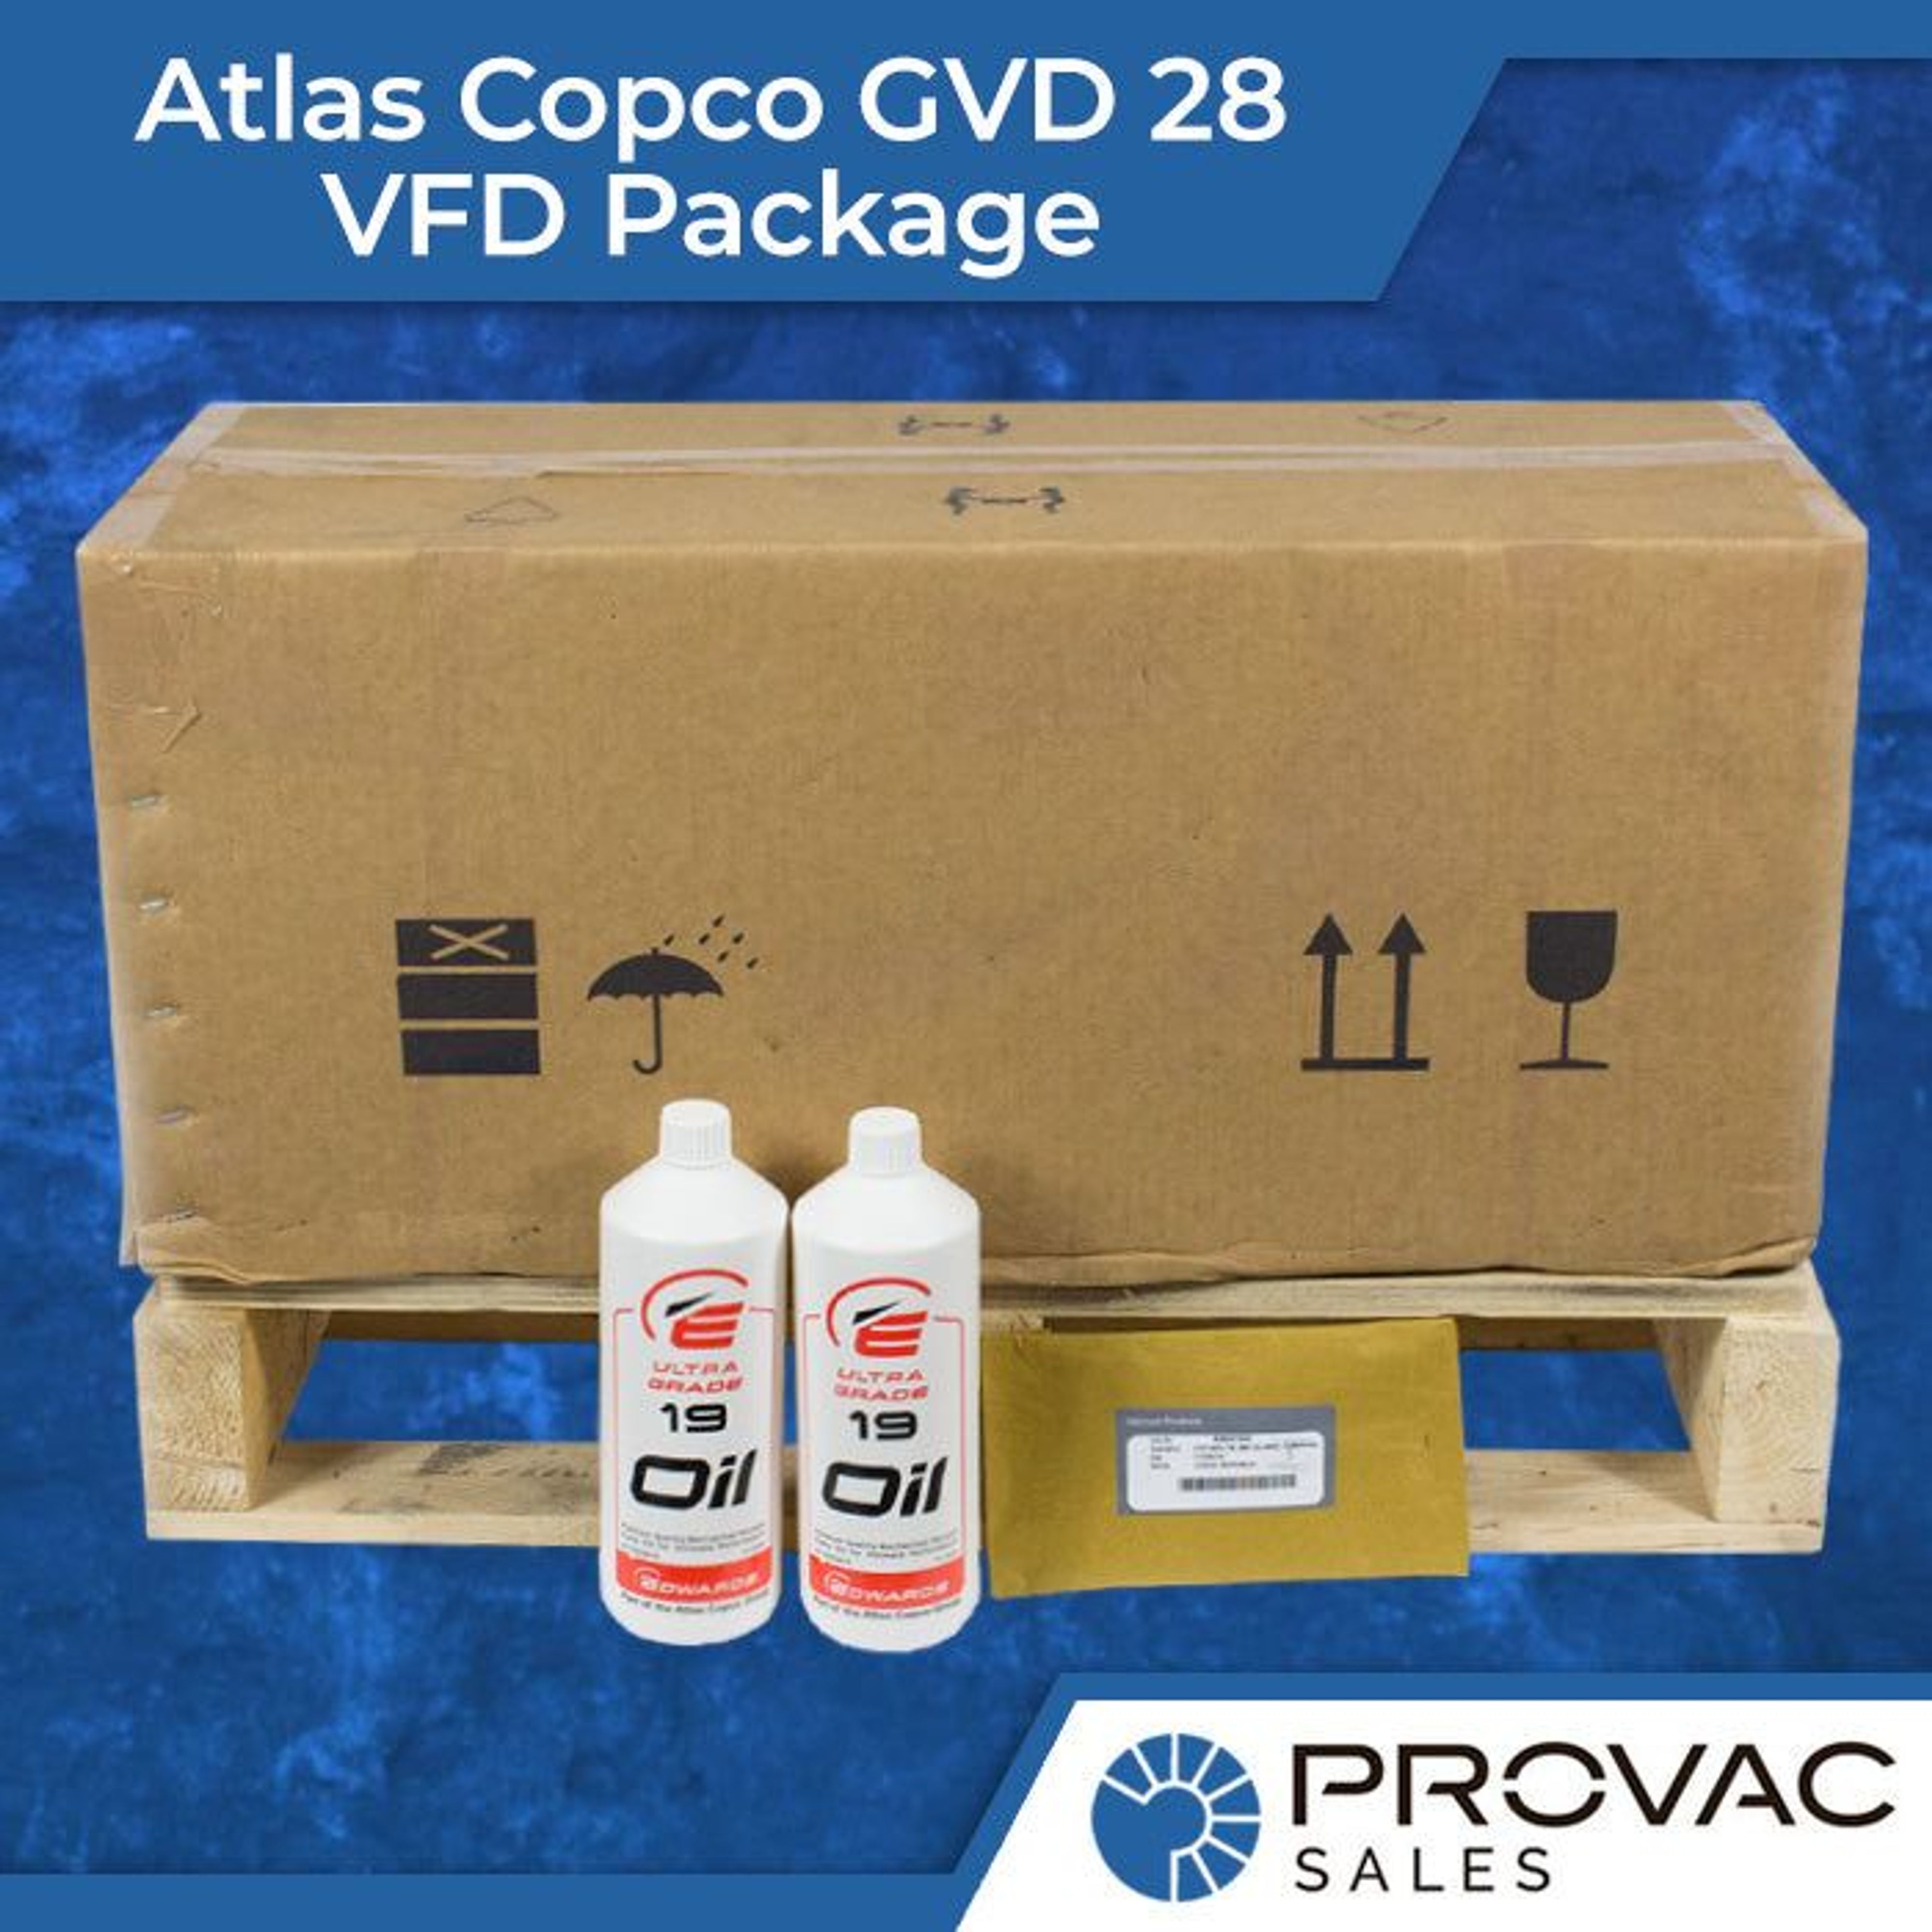 Atlas Copco GVD 28 VFD Package Background